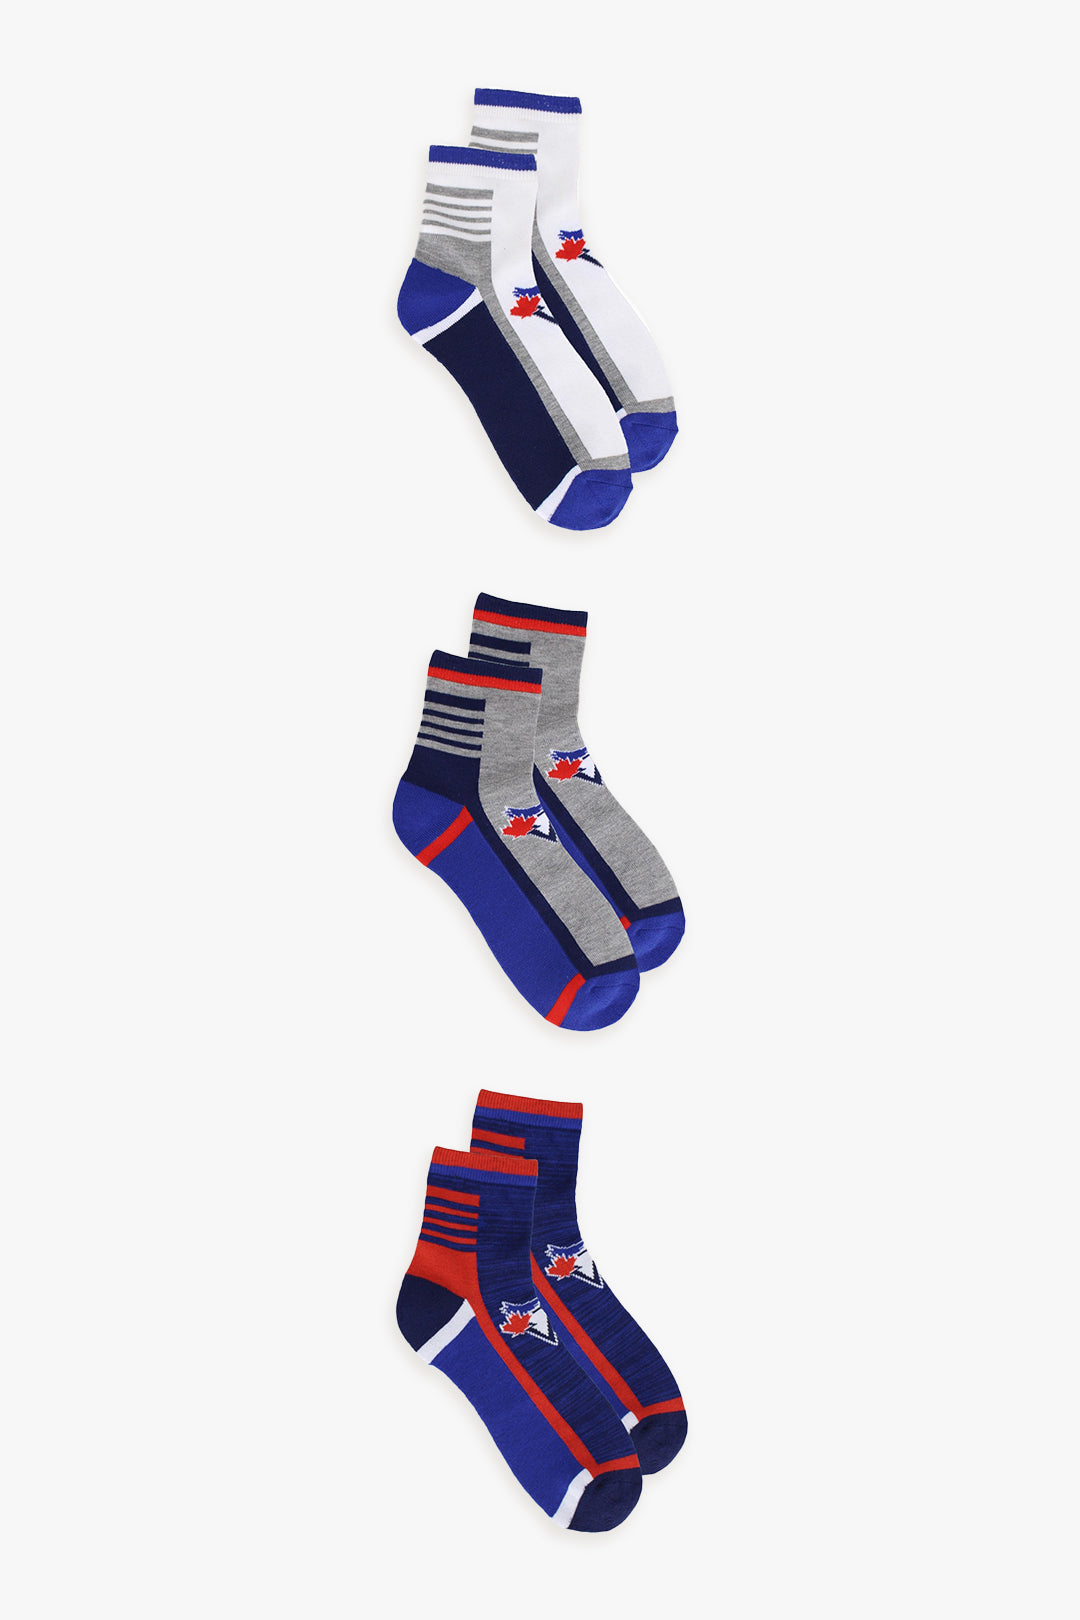 Gertex Toronto Blue Jays Socks Quarter Length 3 Pack Mens Shoe Size 7-12